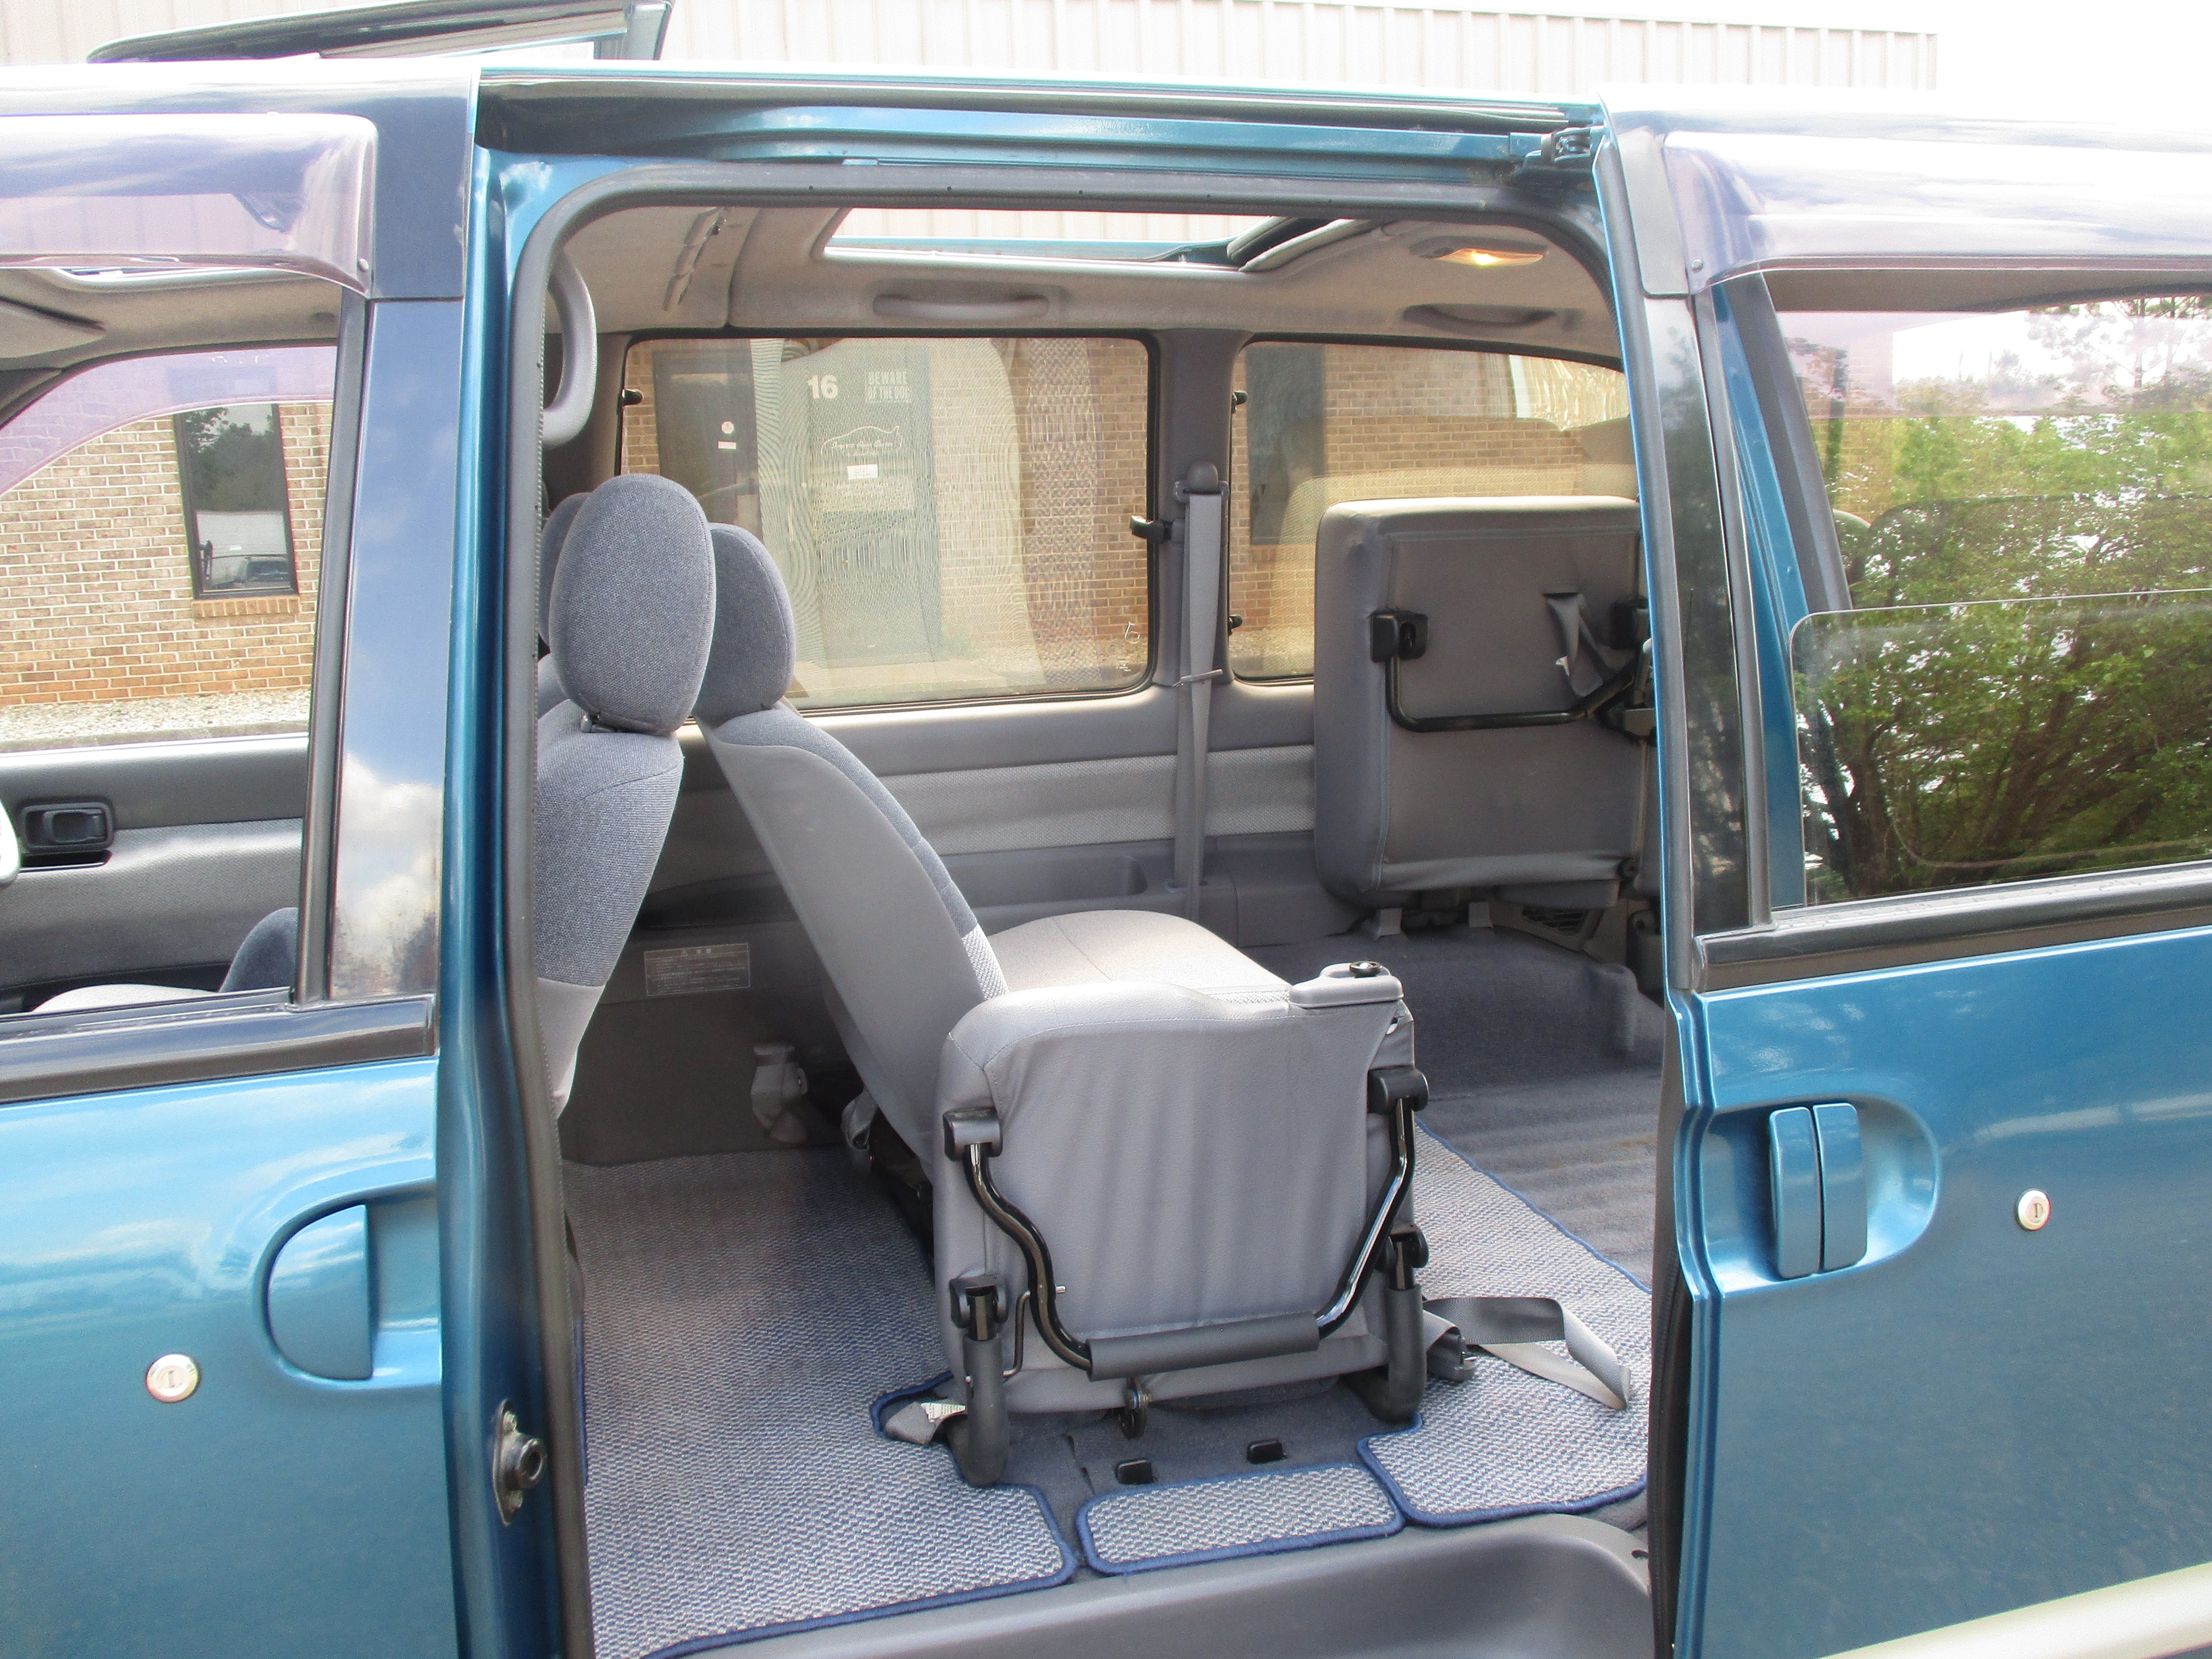 JDM 96 Nissan Serena FX LTD RHD Van Out Door Life Limited Edition RV Pending Sale